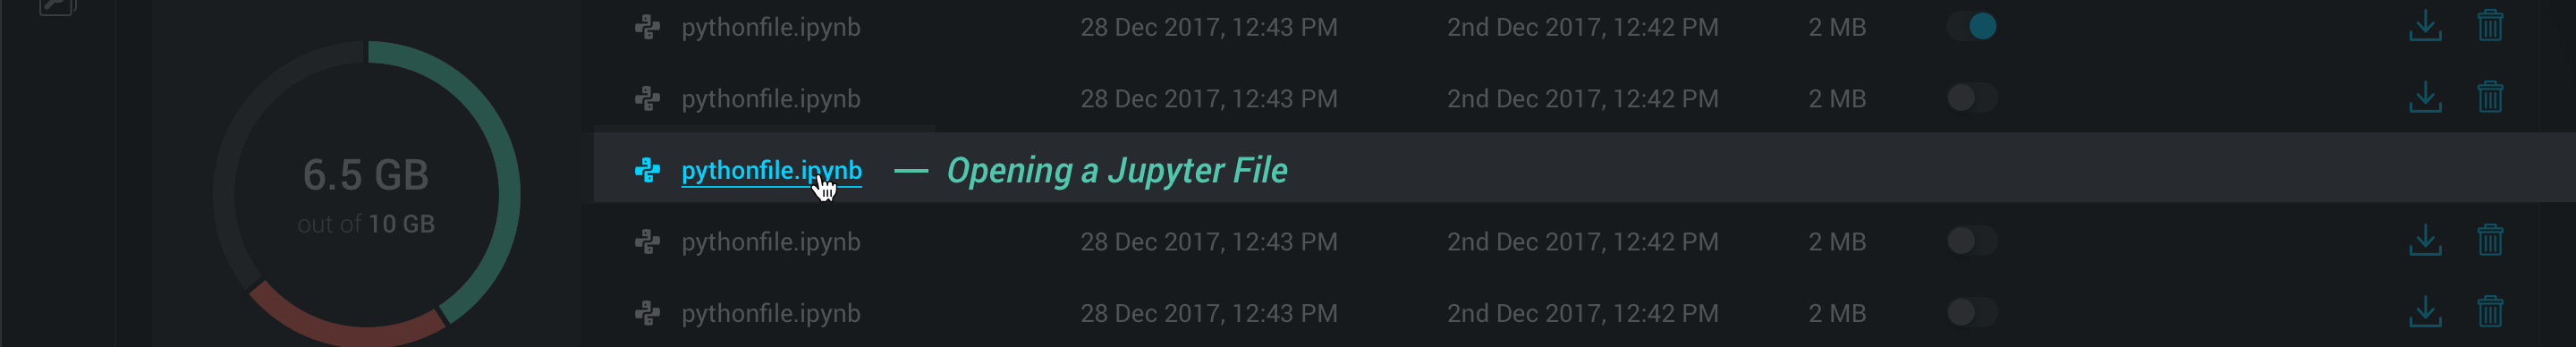 Opening a Jupyter File